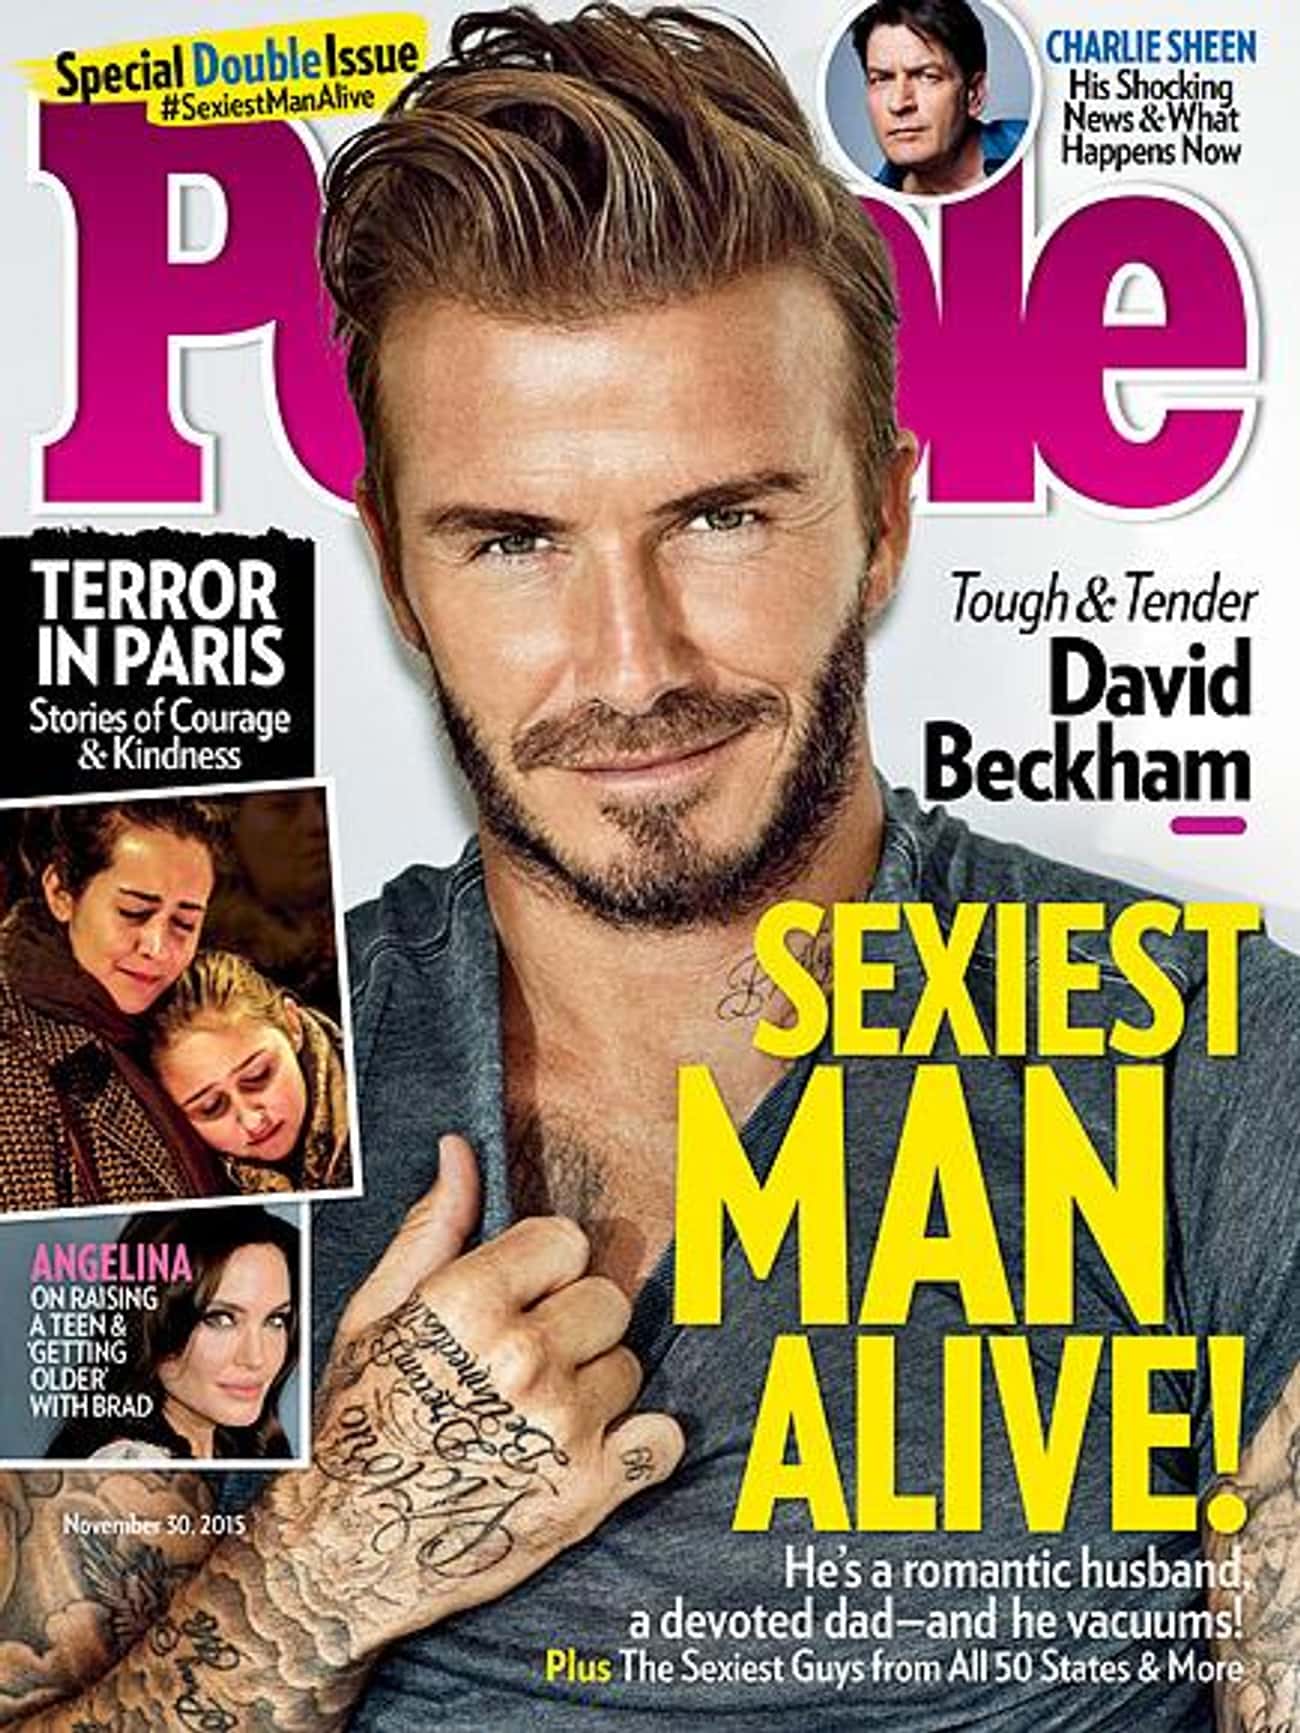 2015 - David Beckham